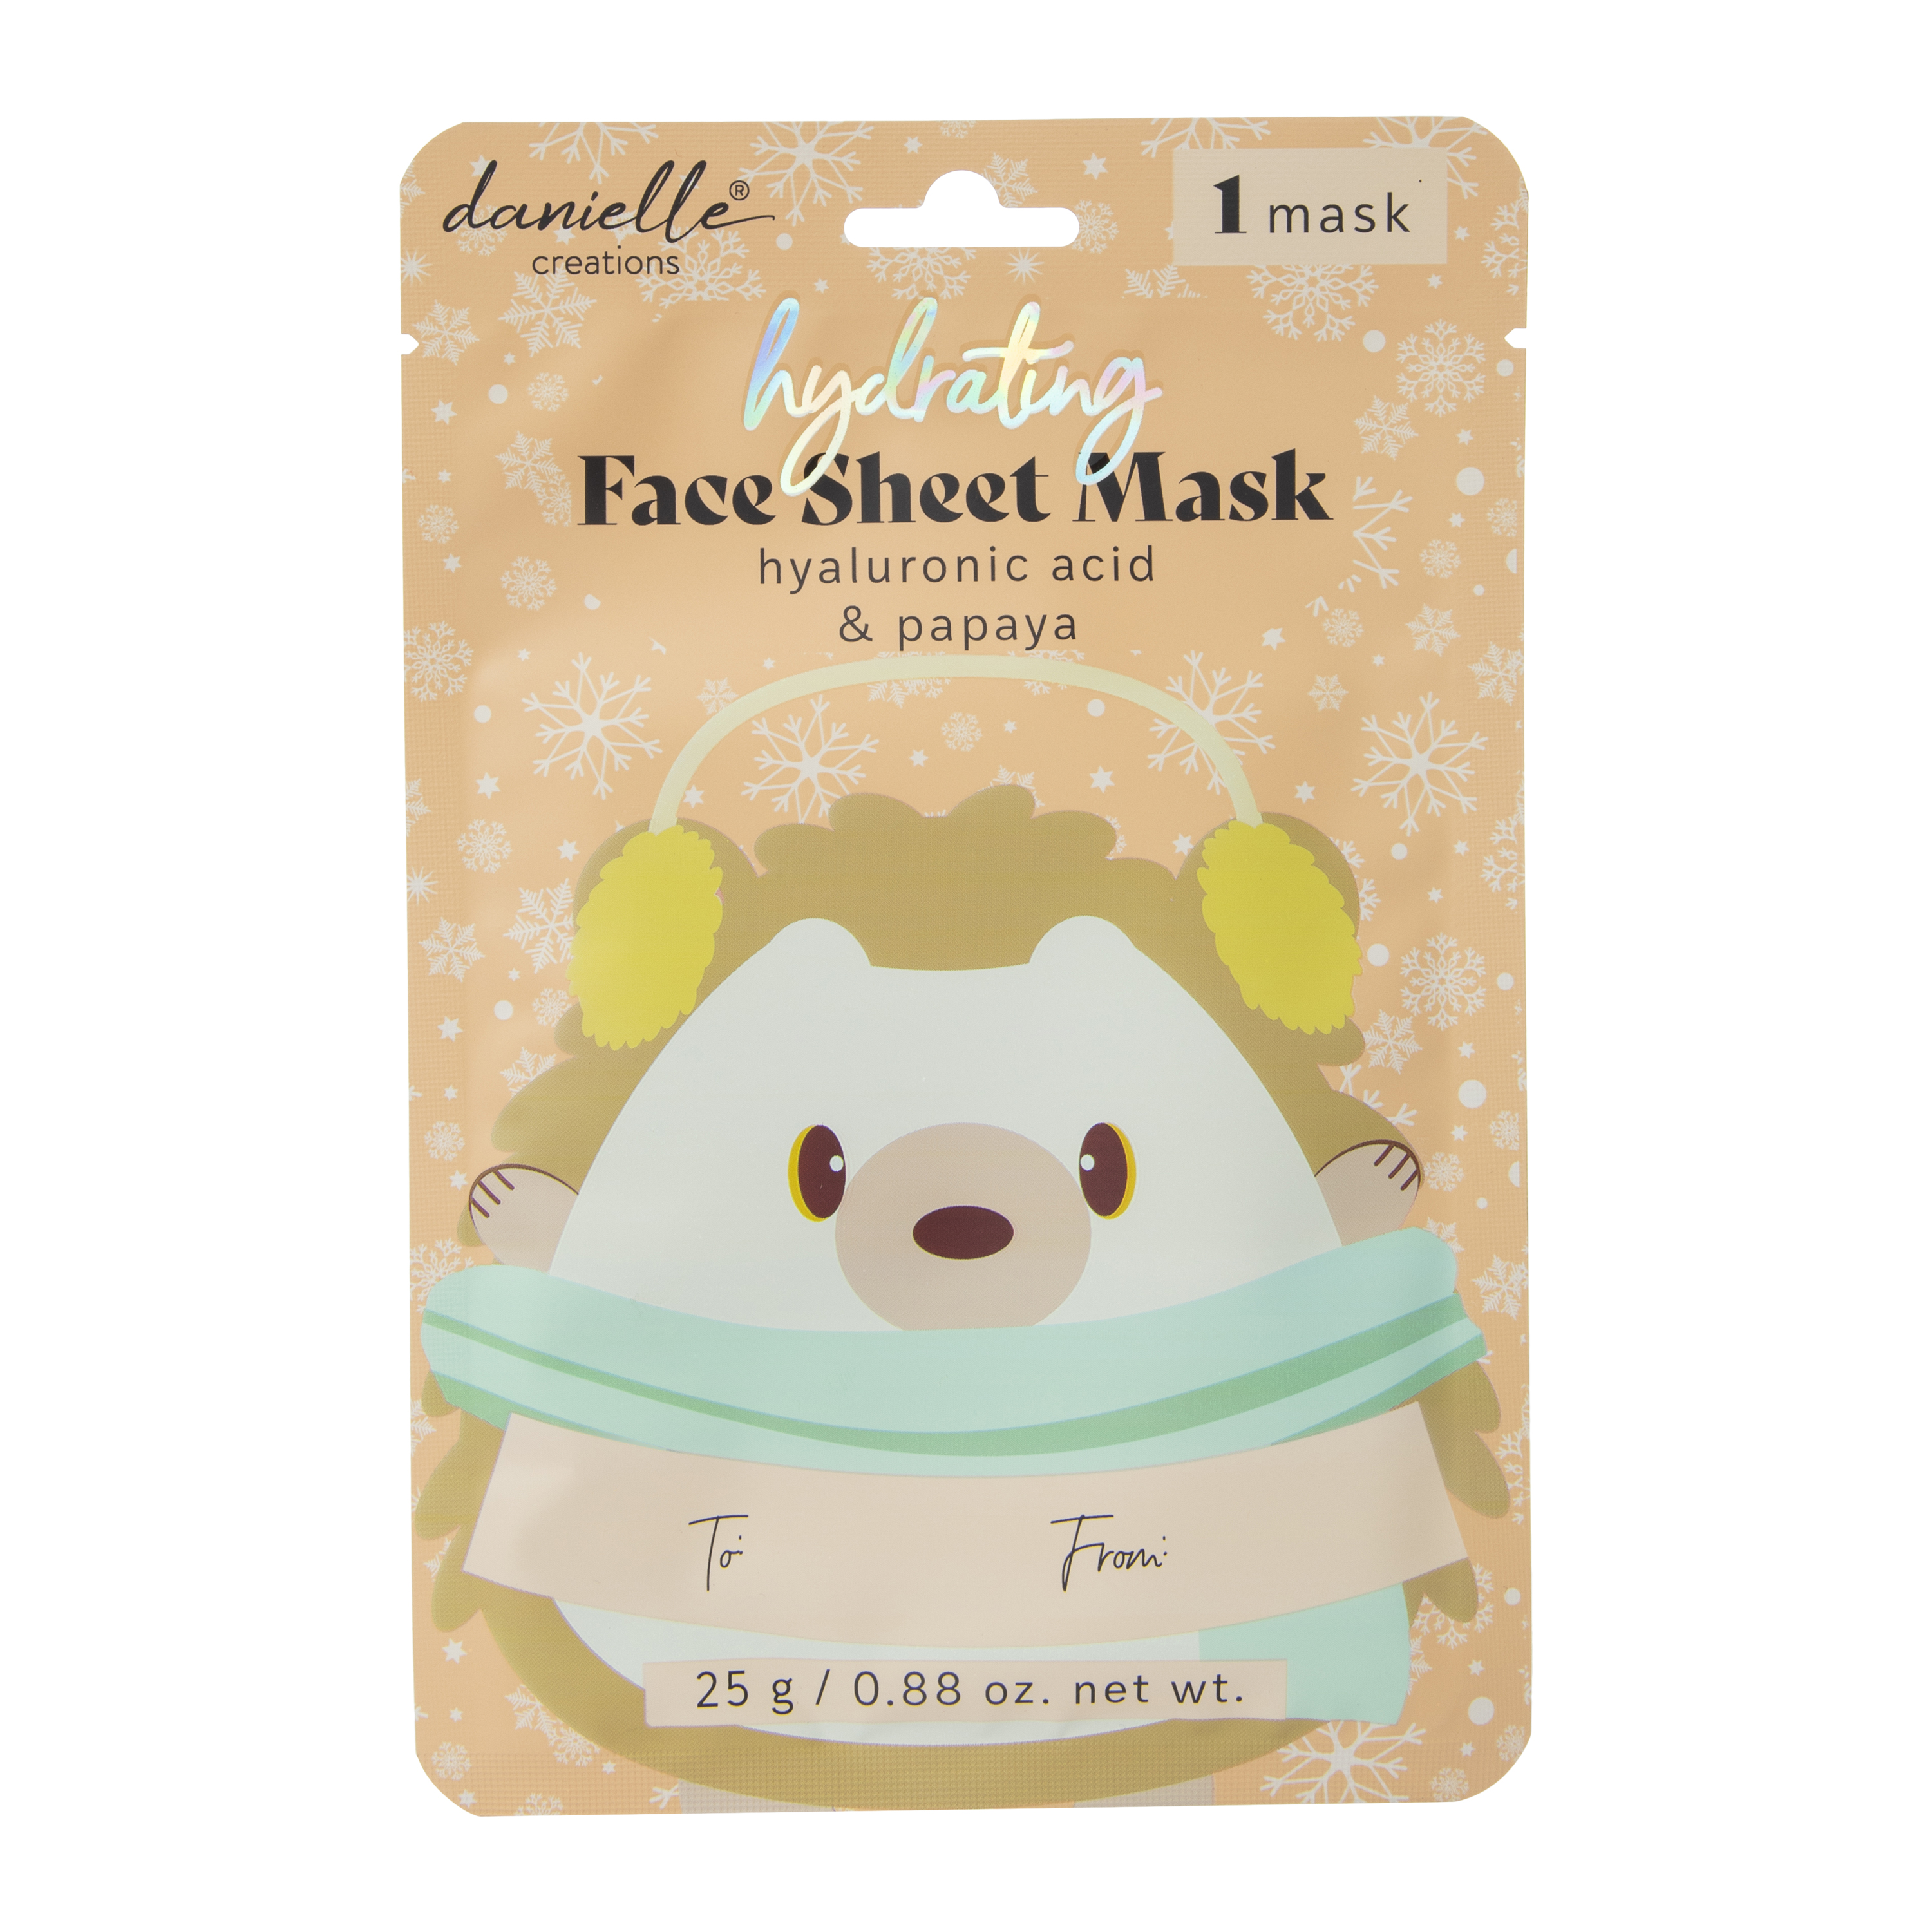 danielle creations® brightening face sheet mask